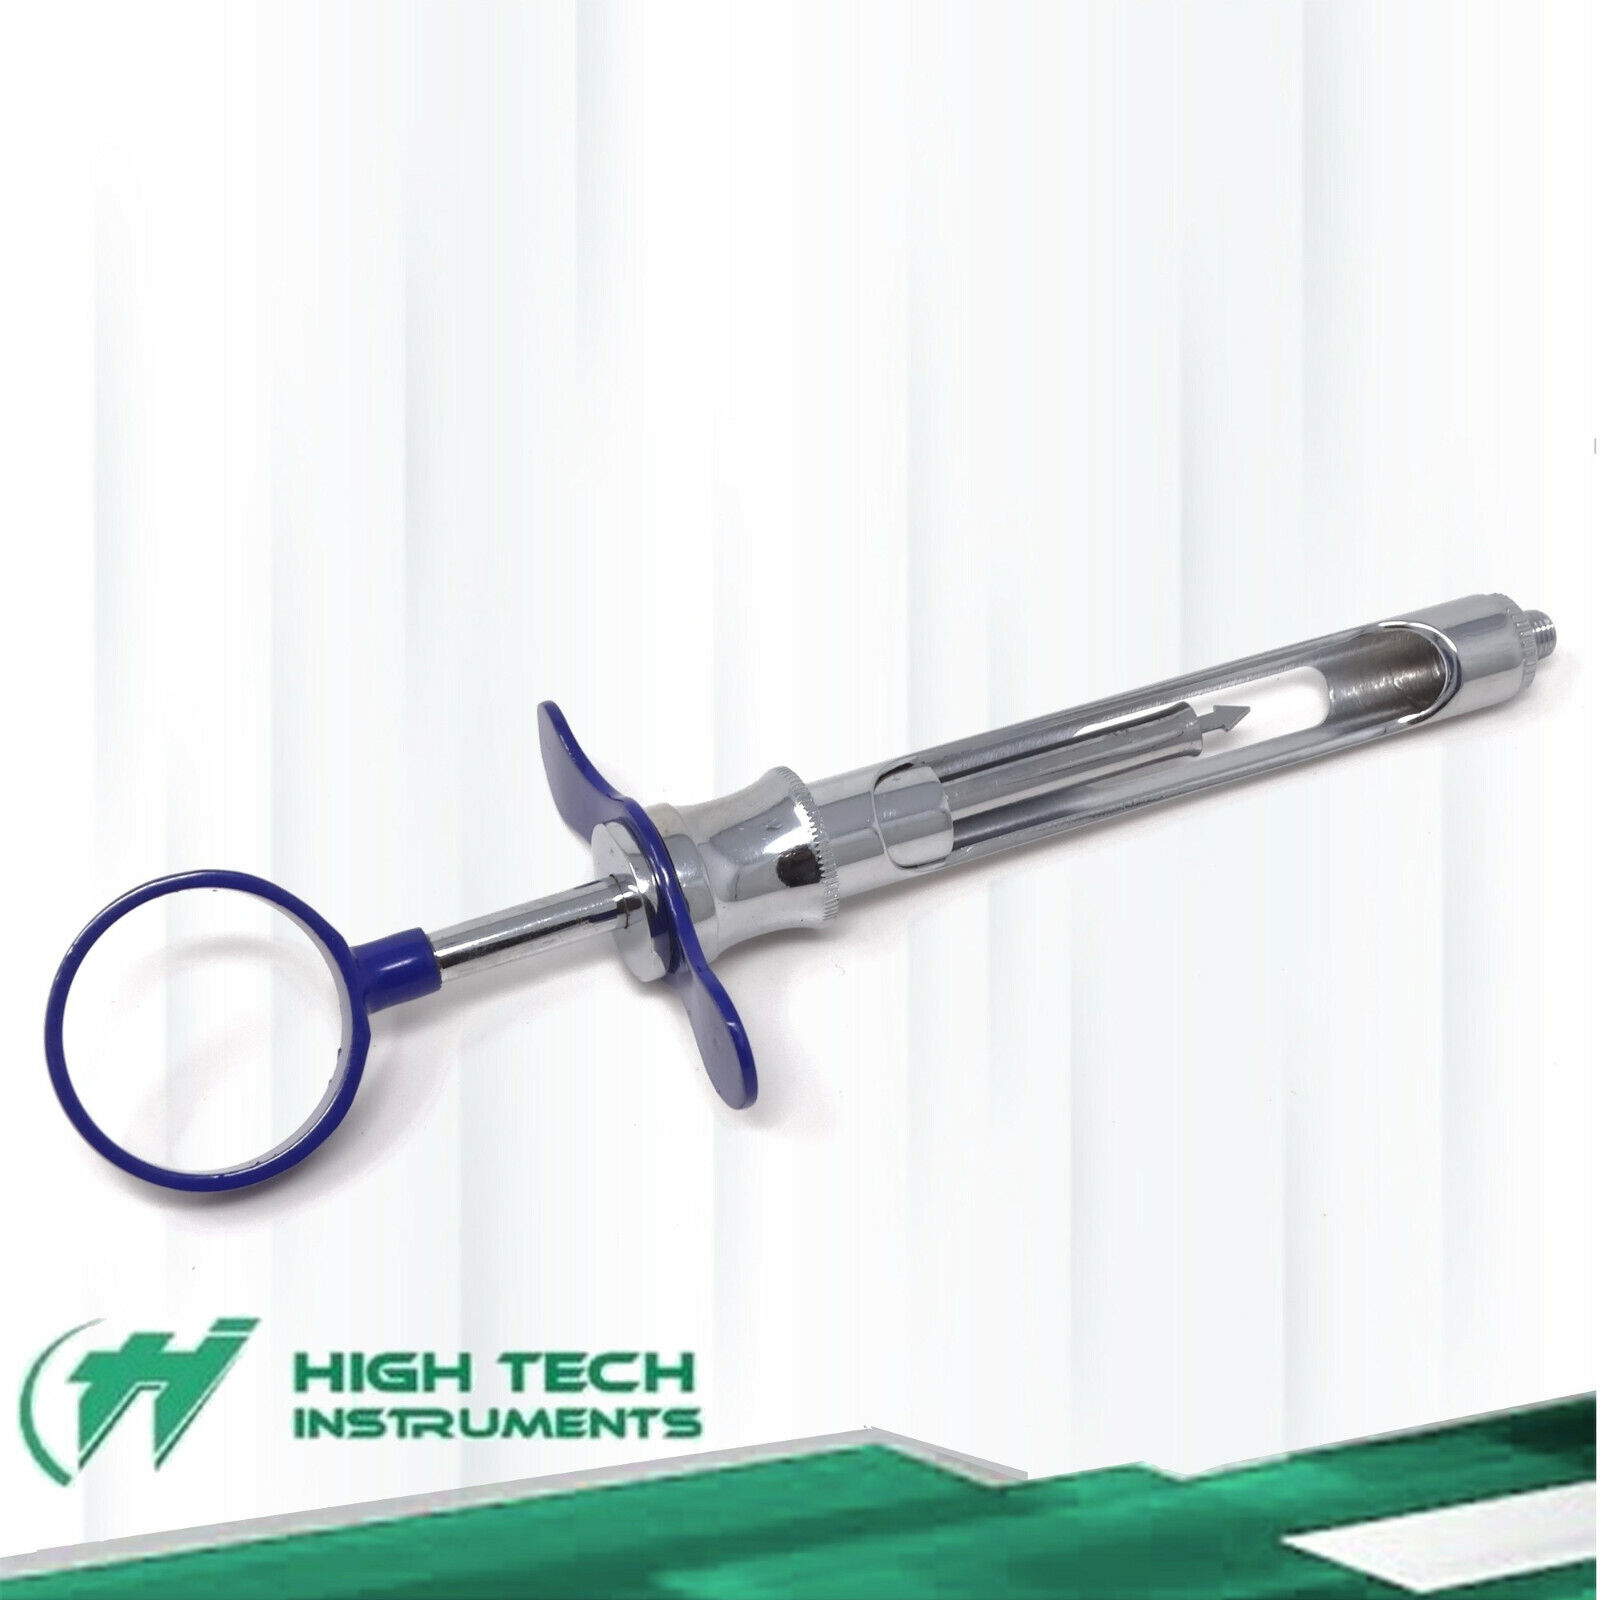 6 Premium Dental Anesthetic Syringe Self-Aspirating 1.8CC-Dental Instruments-A++ HIGH TECH INSTRUMENTS Does Not Apply - фотография #7